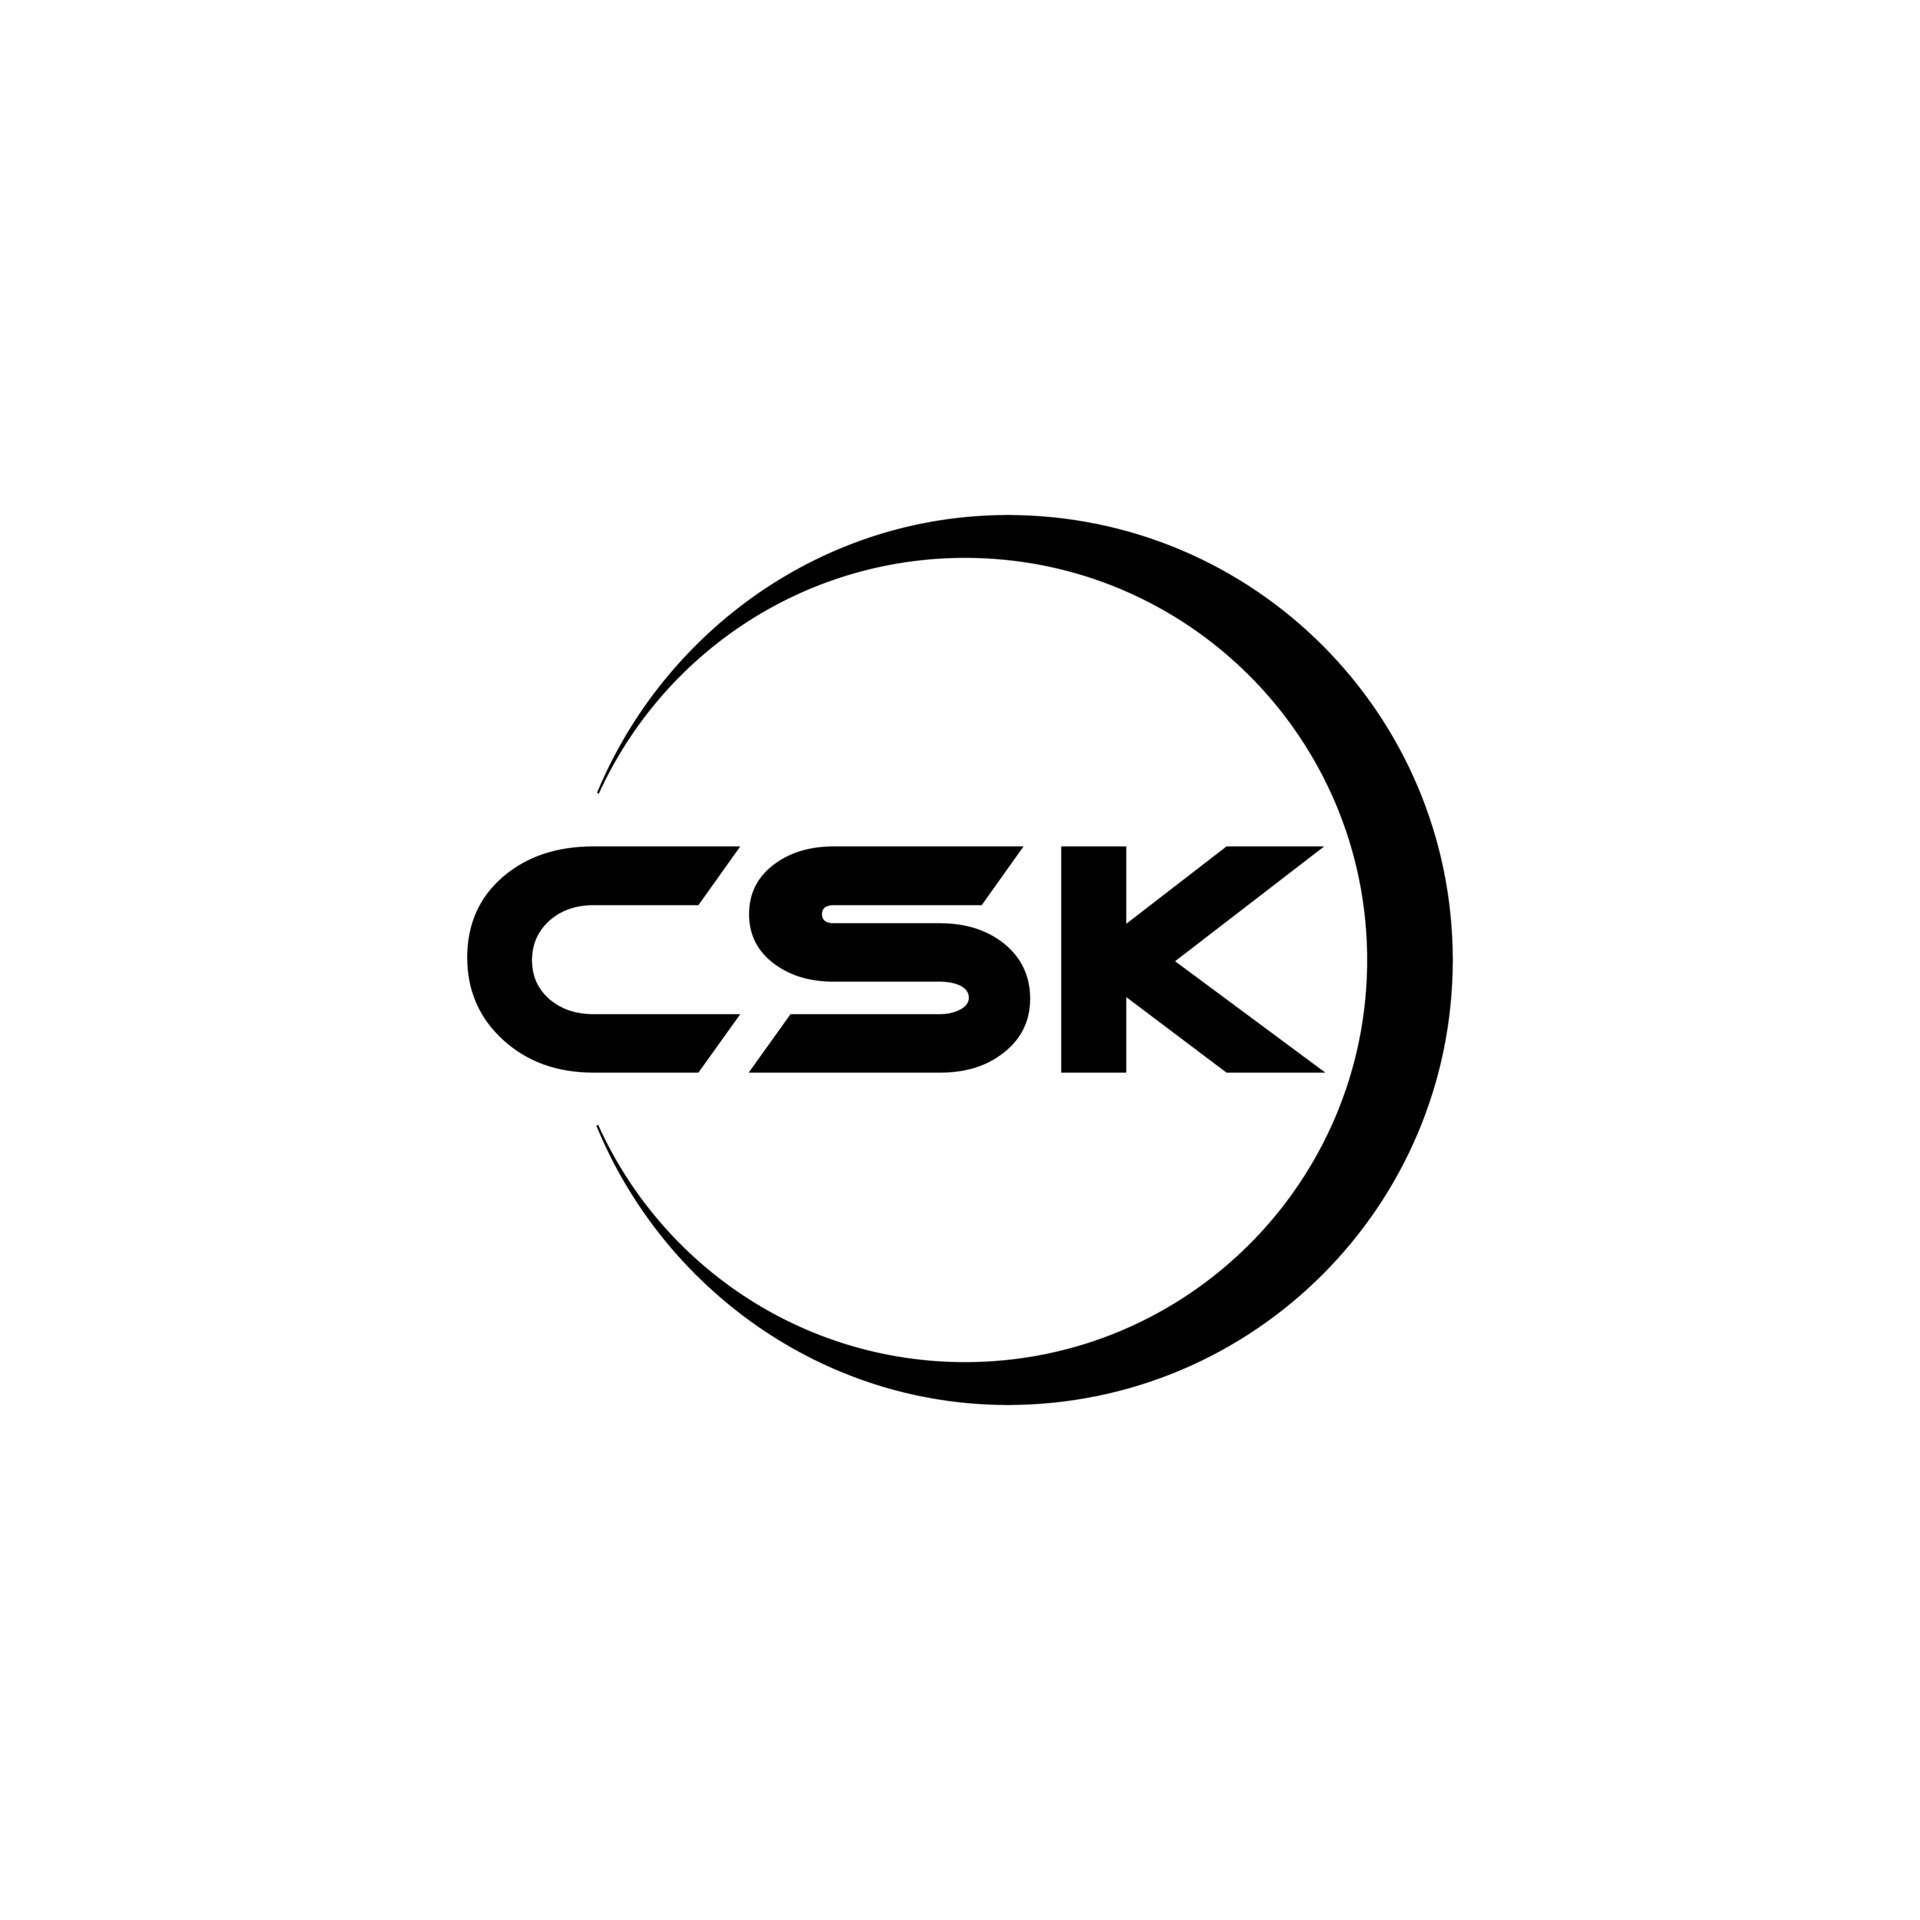 CSK Wallpapers HD | Chennai super kings, Chennai, Logo design inspiration-nextbuild.com.vn